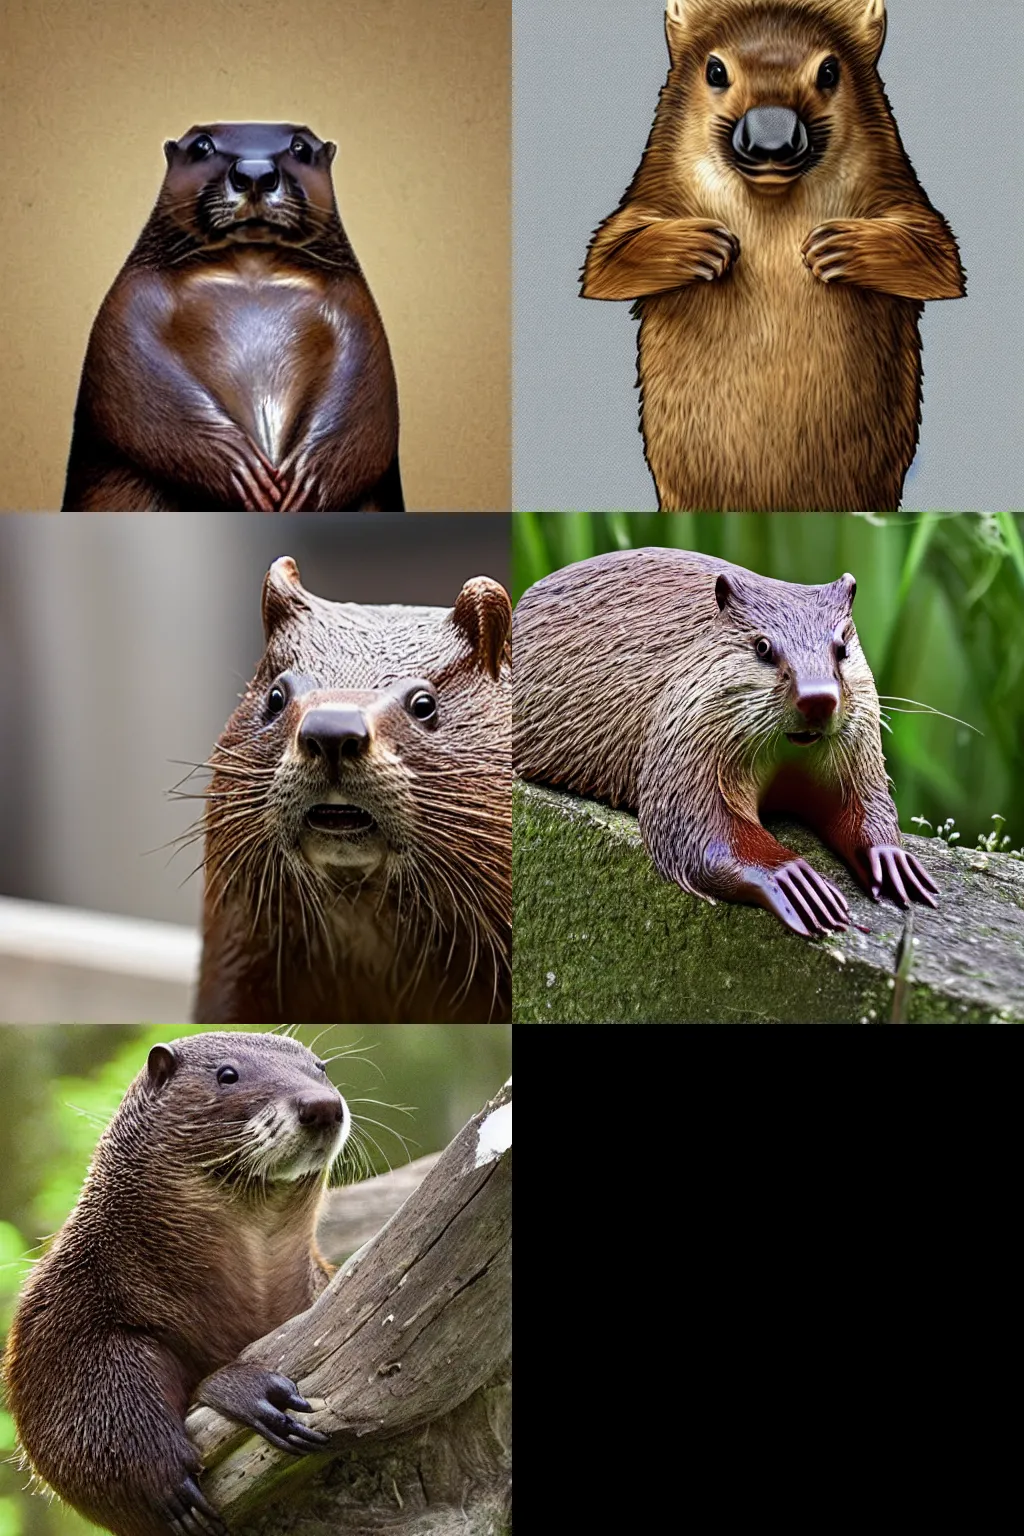 Prompt: justice beaver